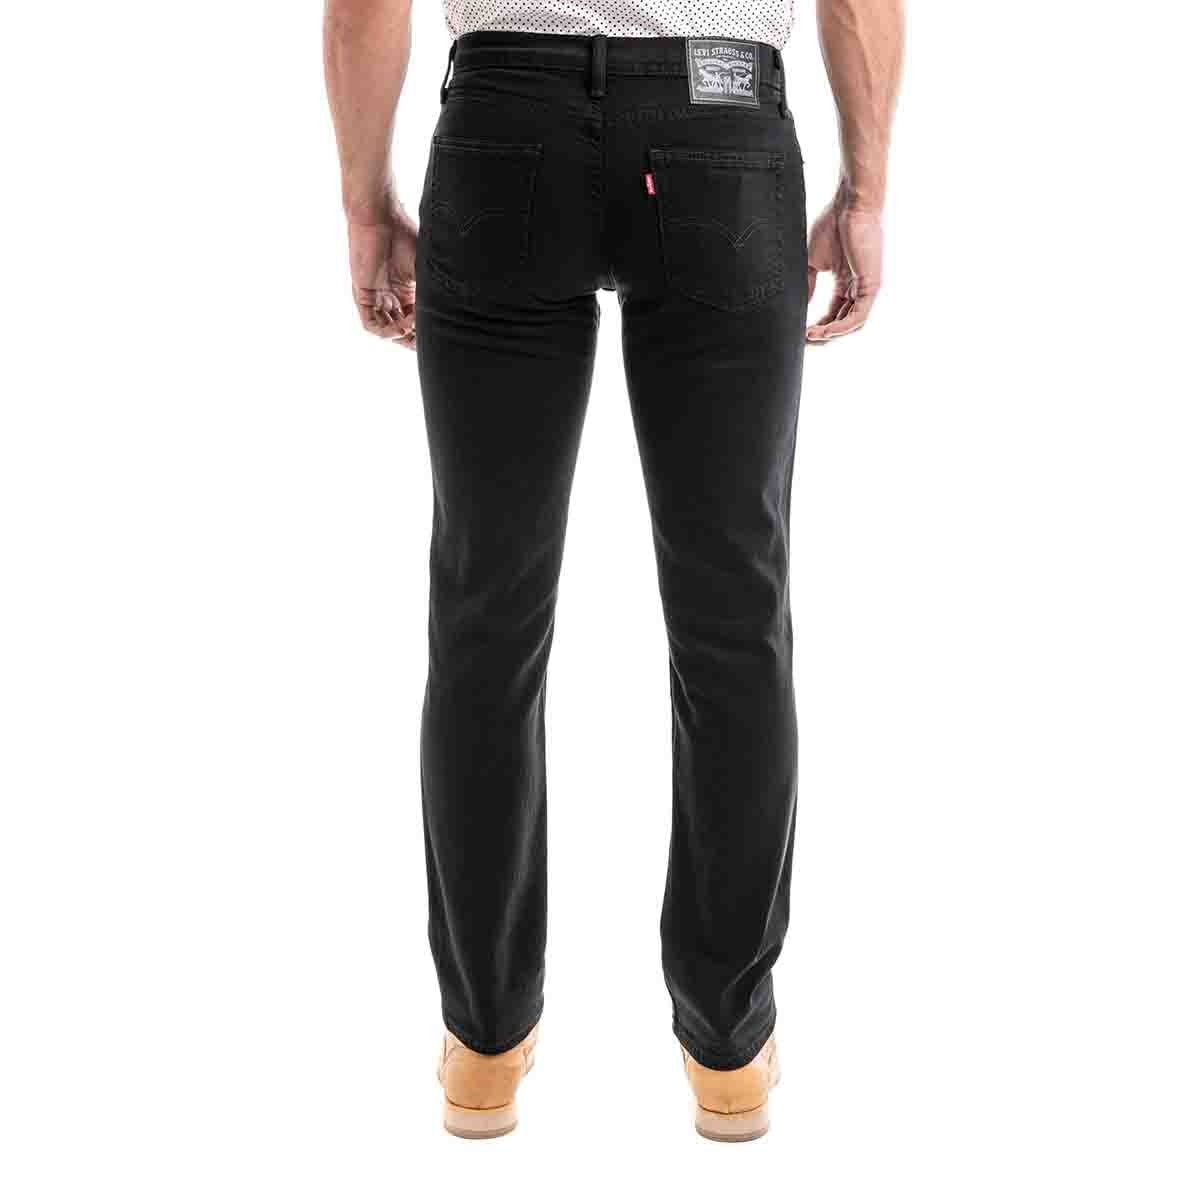 Pantalon 511 Slim Fit Color Negro Levi S Para Caballero Sears